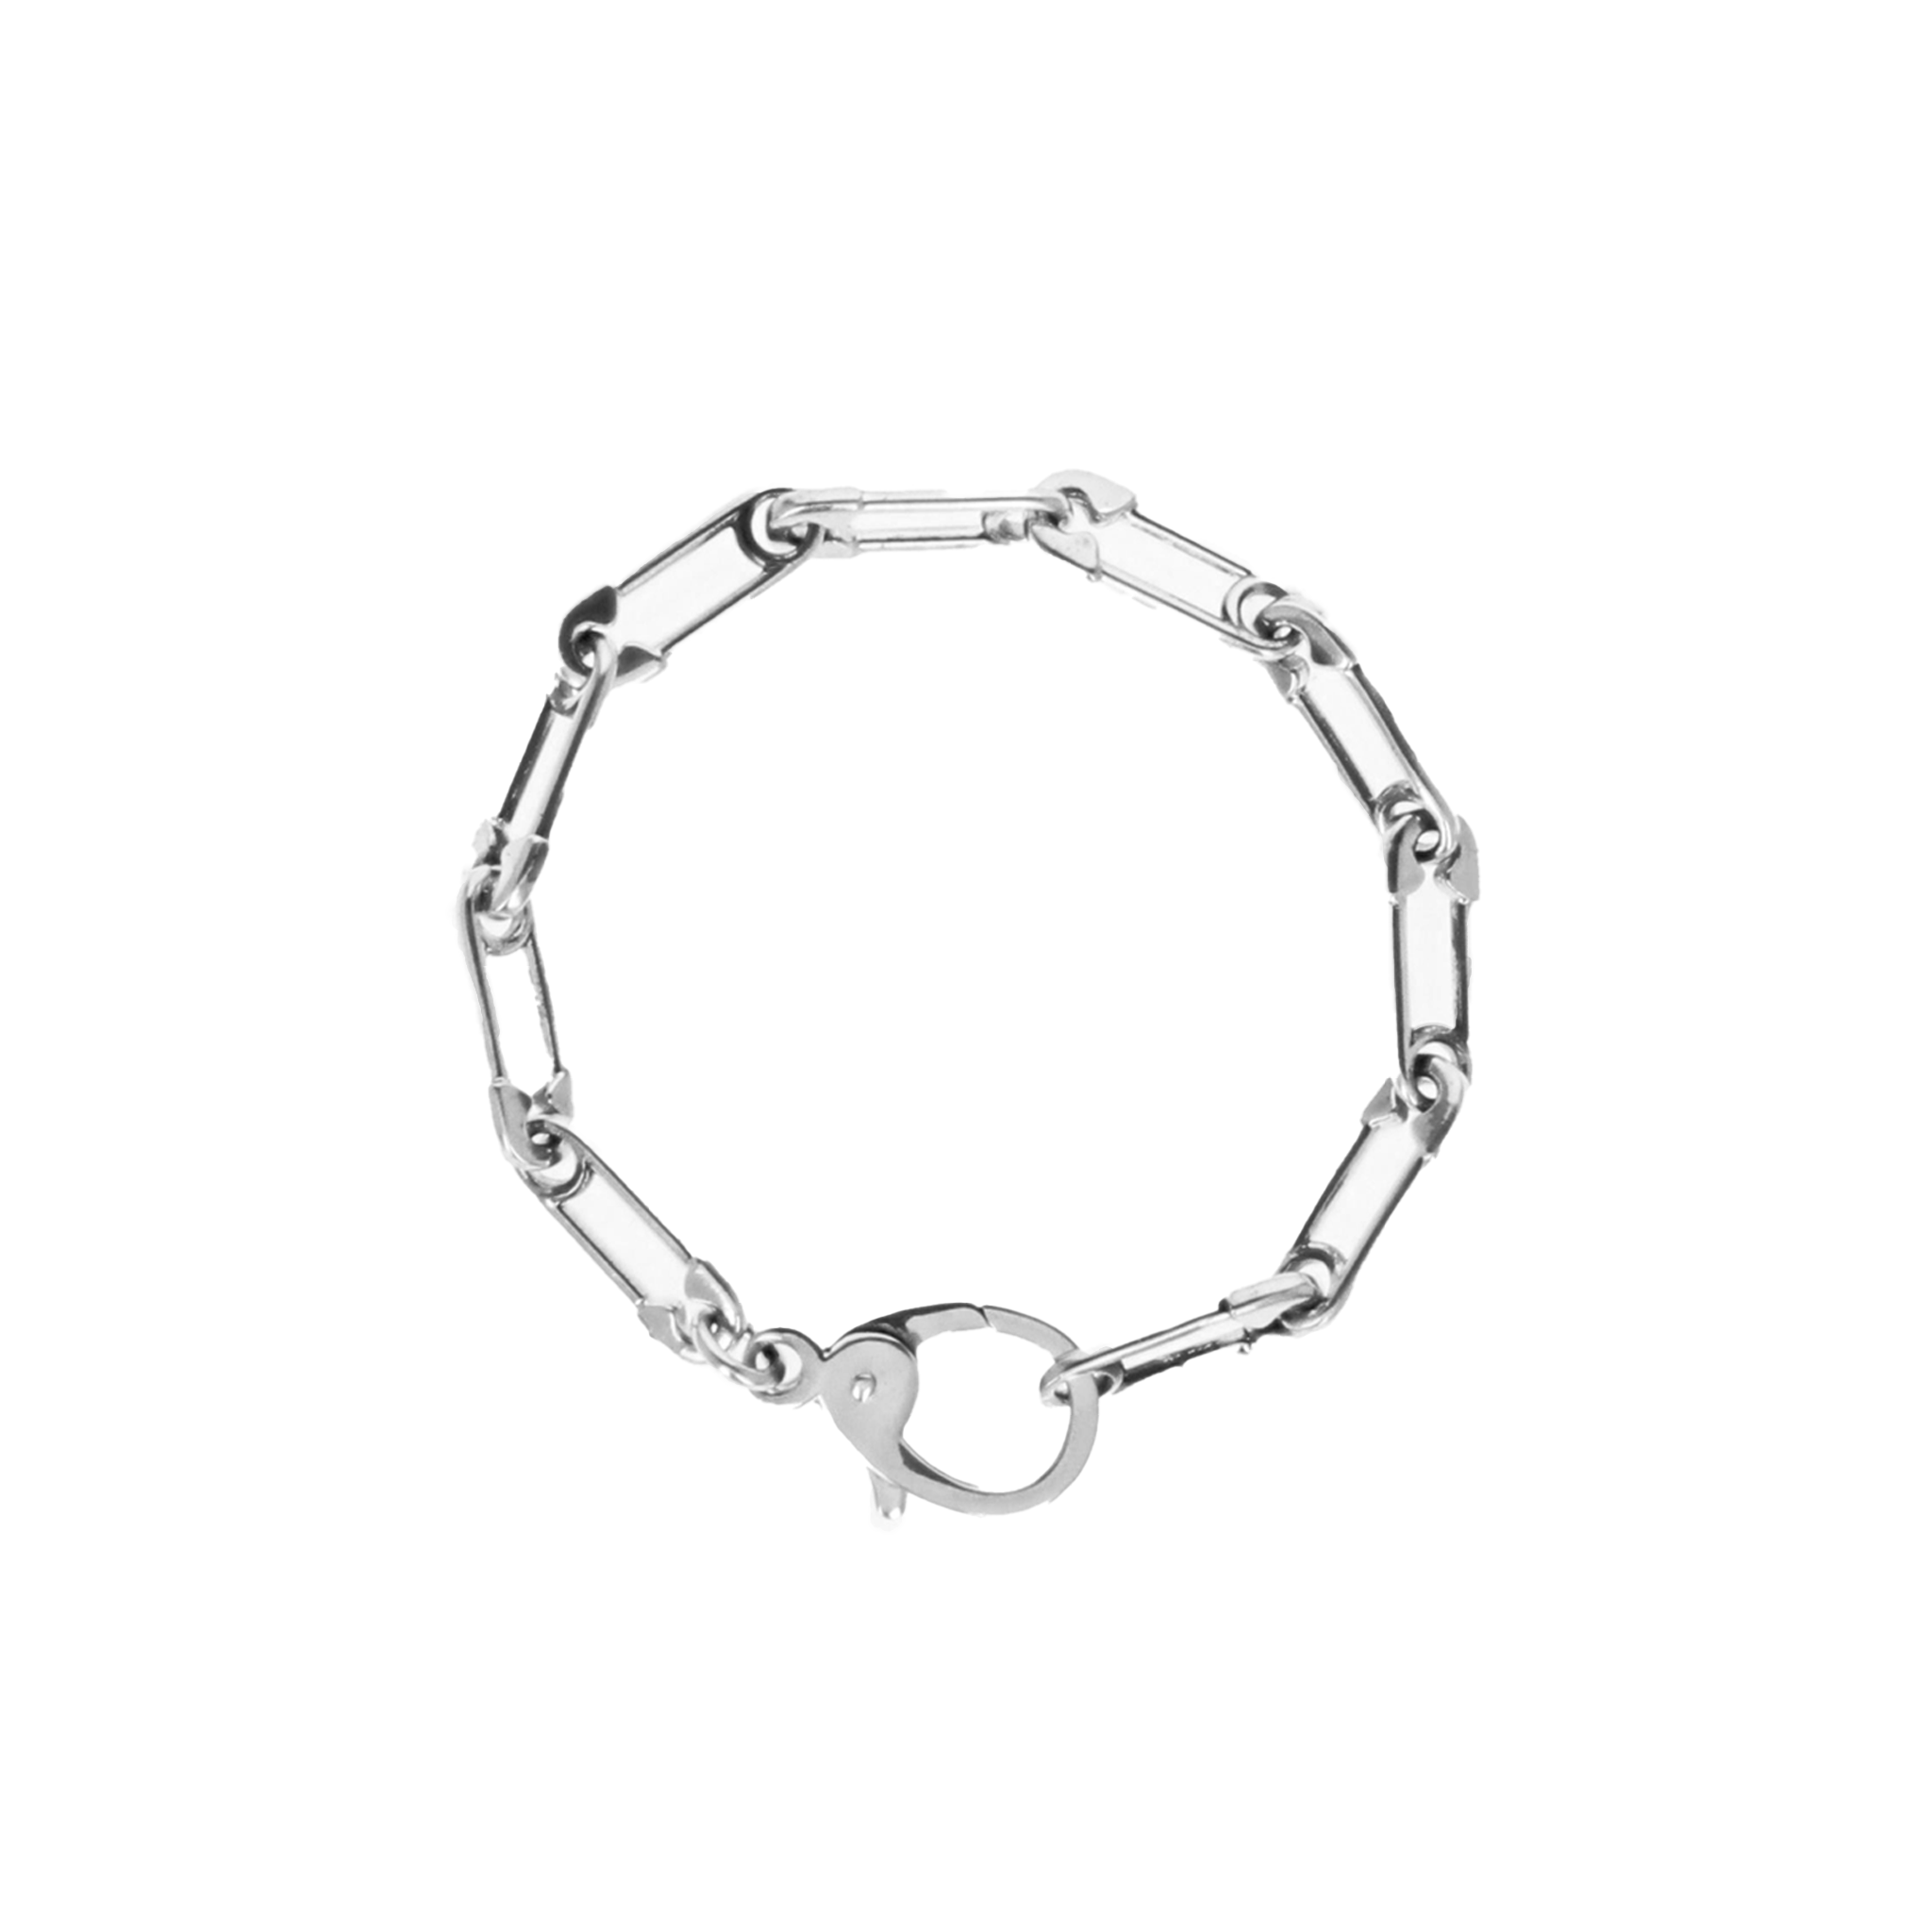 Safety Pin Bracelet – King Baby